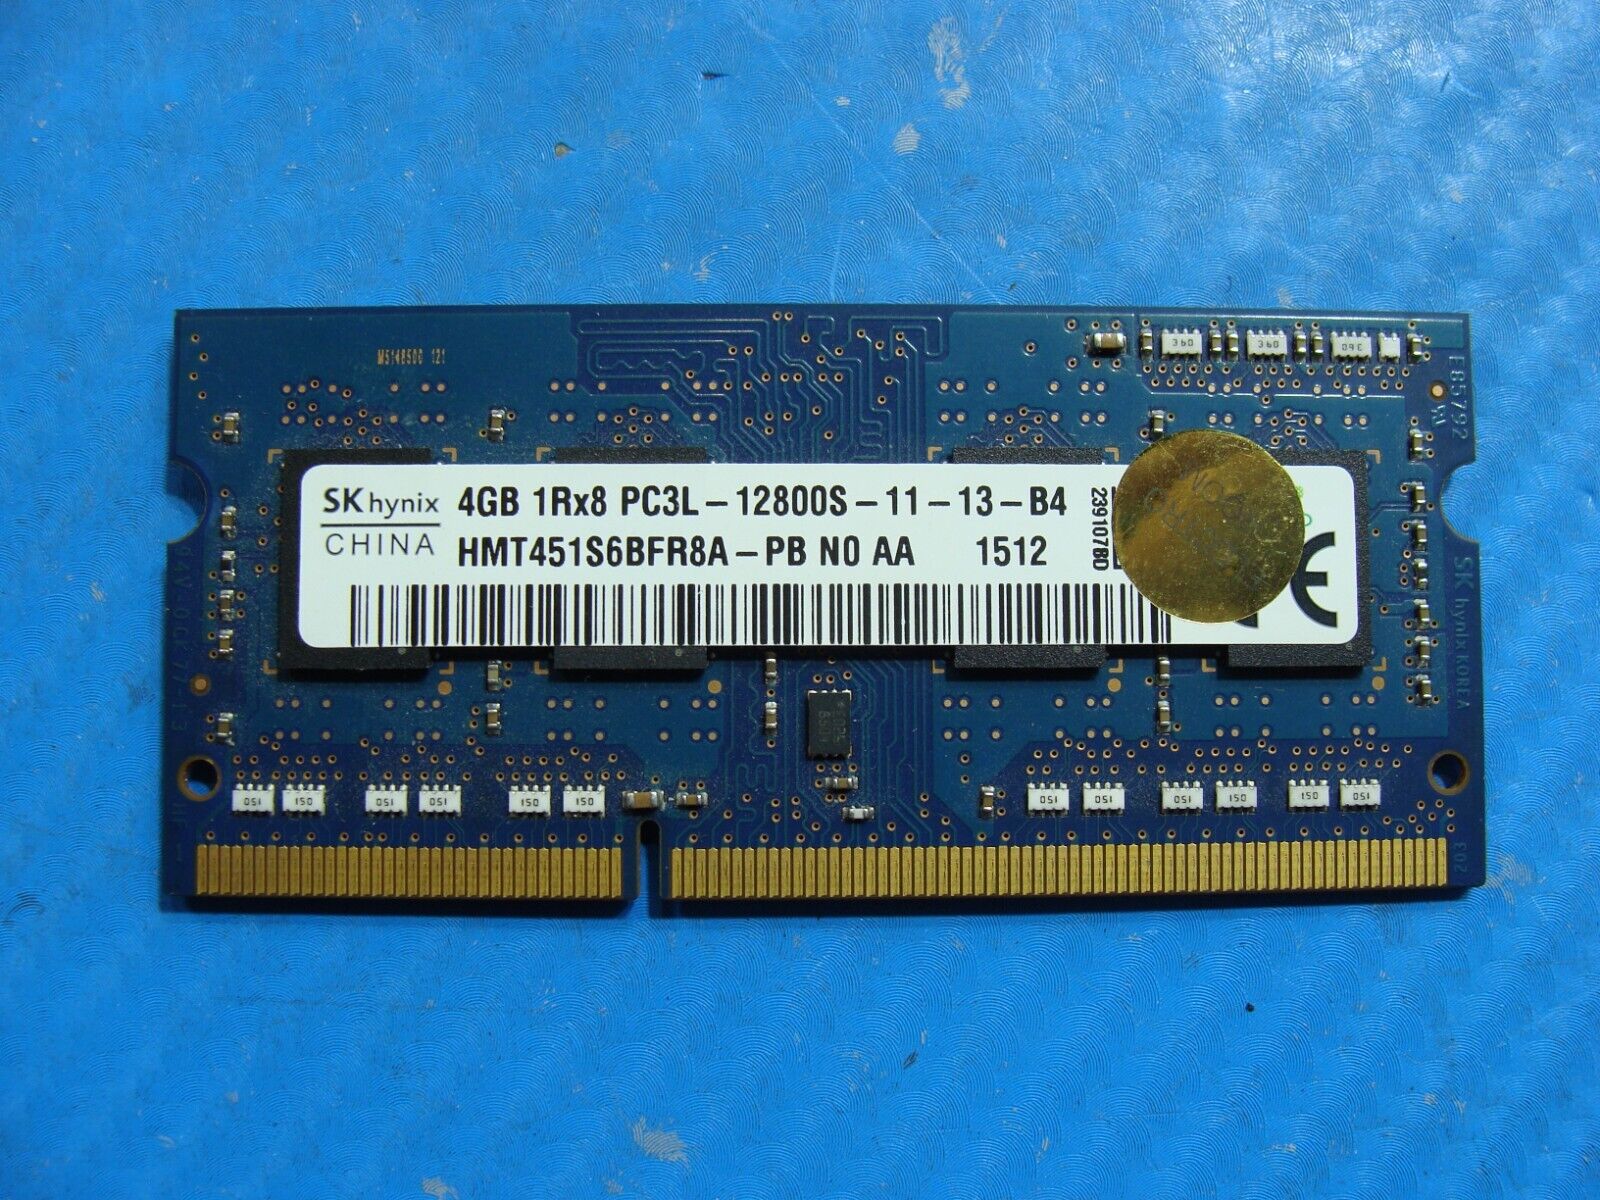 Lenovo Y50-70 SK Hynix 4GB 1Rx8 PC3L-12800S Memory RAM SO-DIMM HMT451S6BFR8A-PB